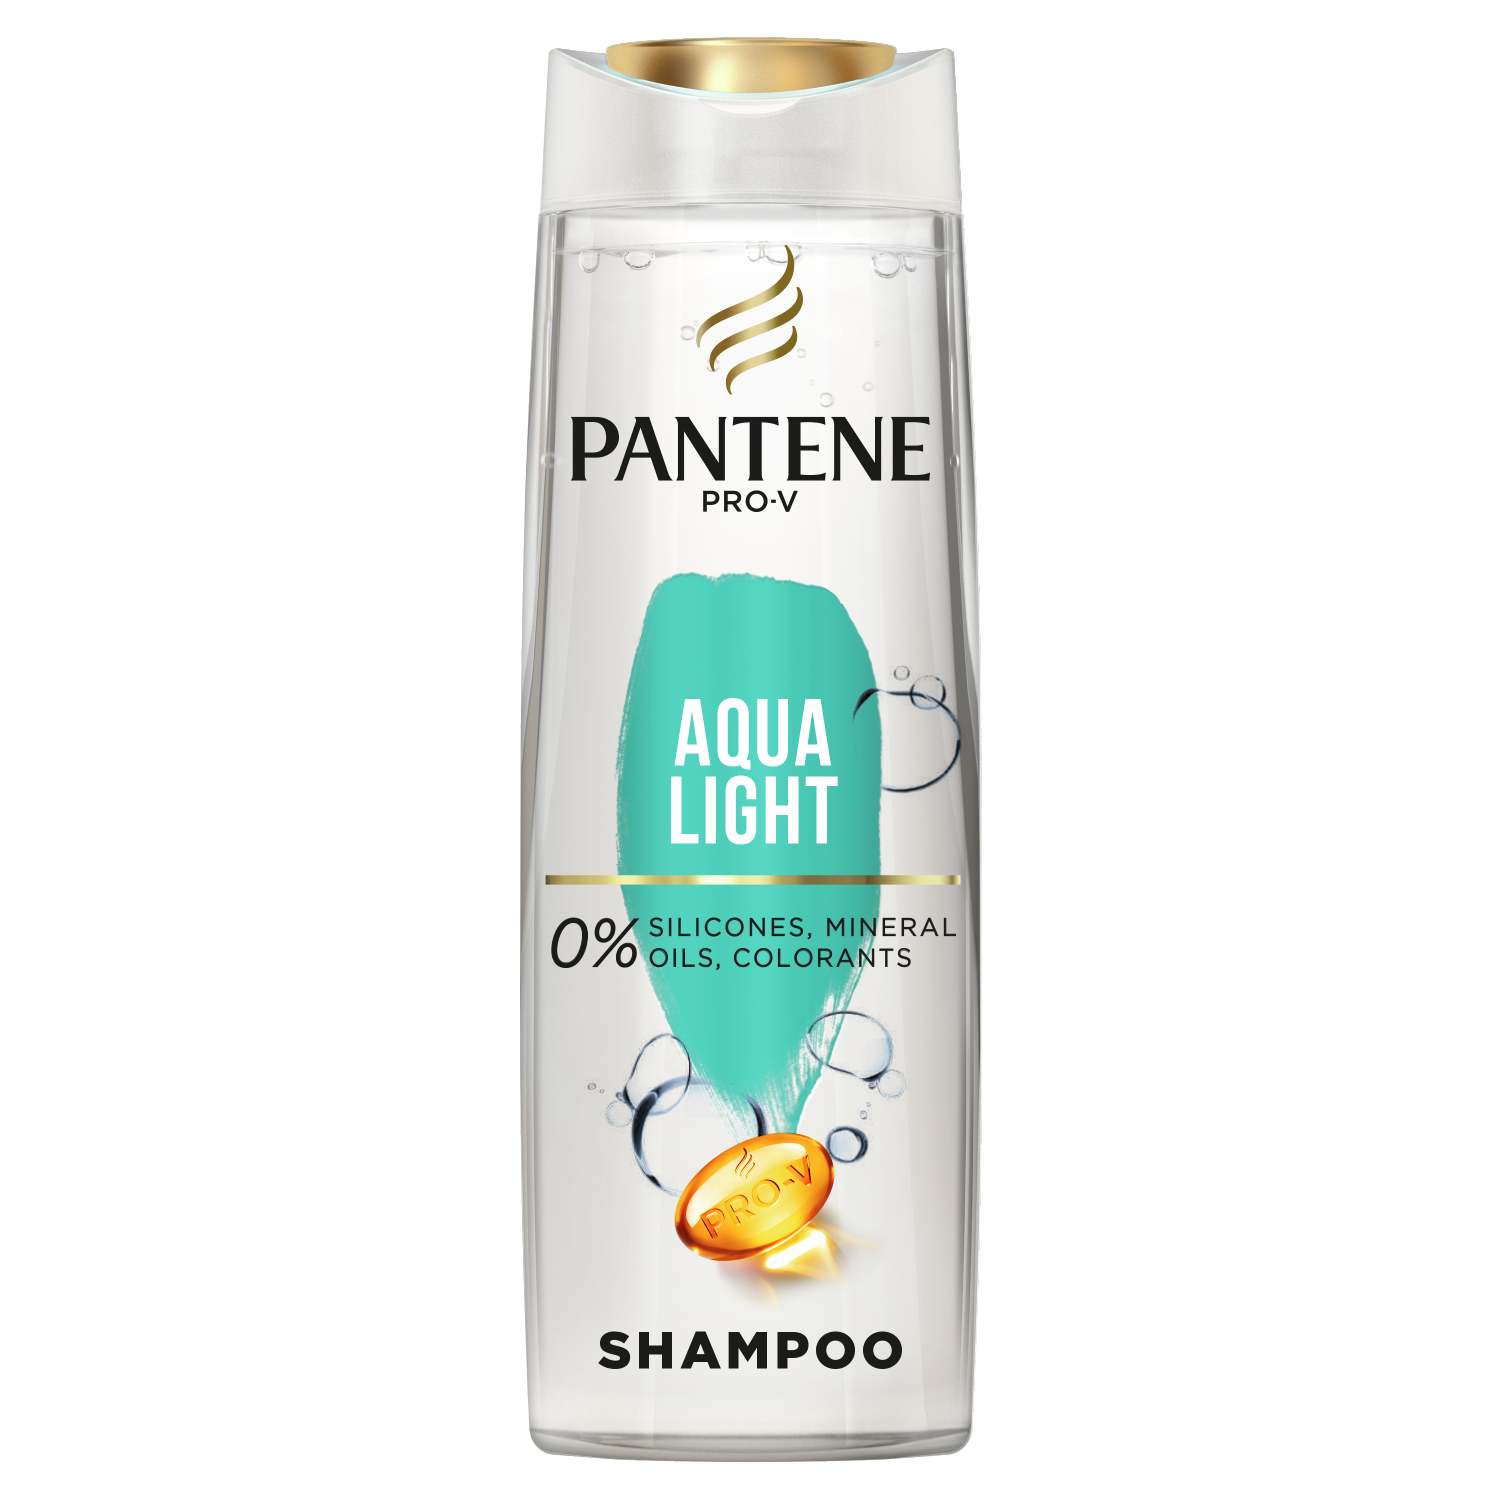 pantene aqua light szampon wizaz